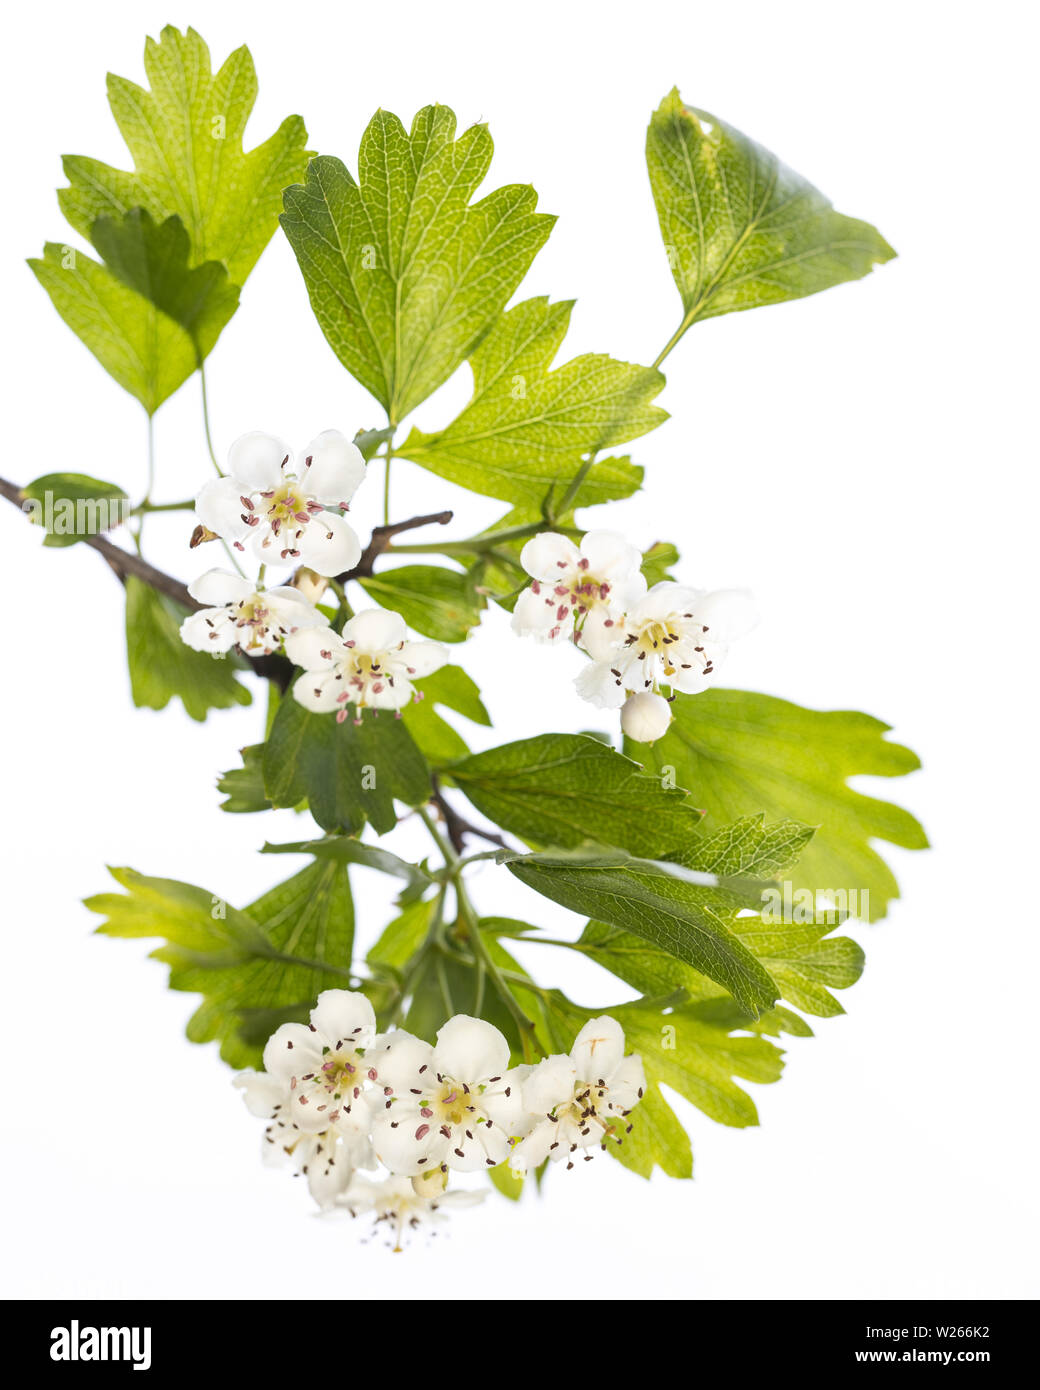 healing / medicinal plants: Hawthorn (Crataegus monogyna) branch isolated on white background Stock Photo